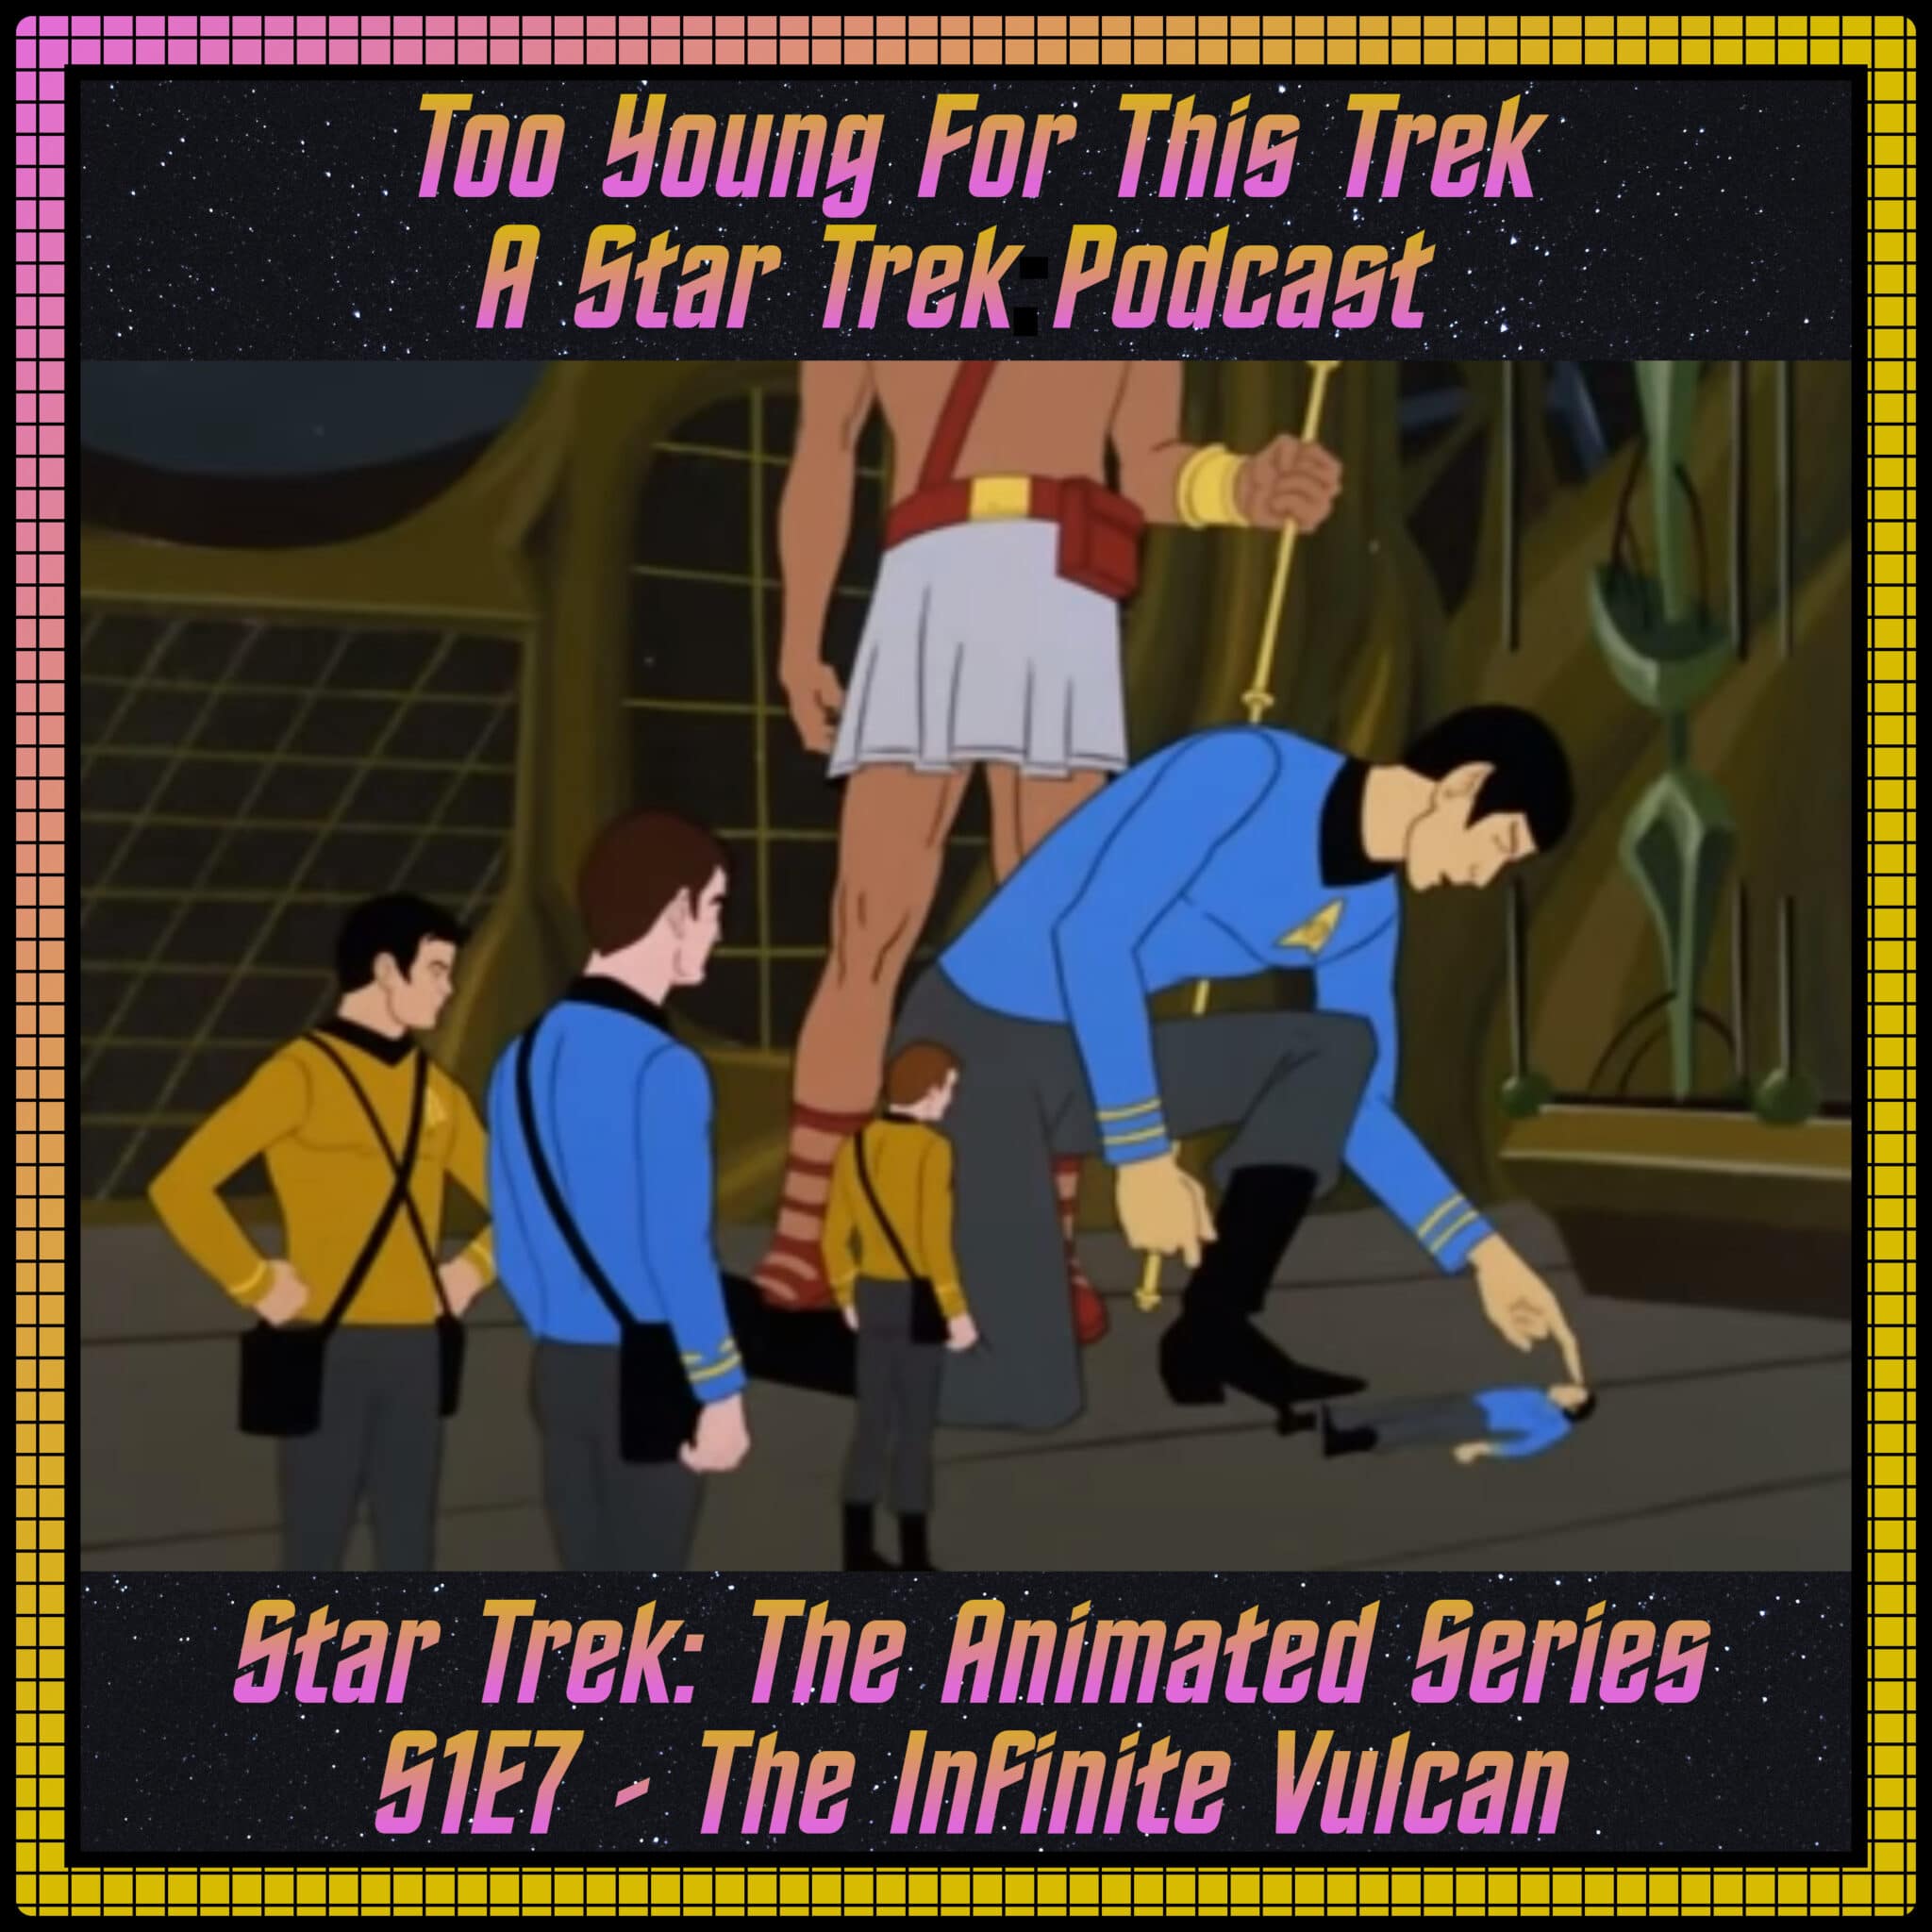 Star Trek: The Animated Series S1E7 - The Infinite Vulcan